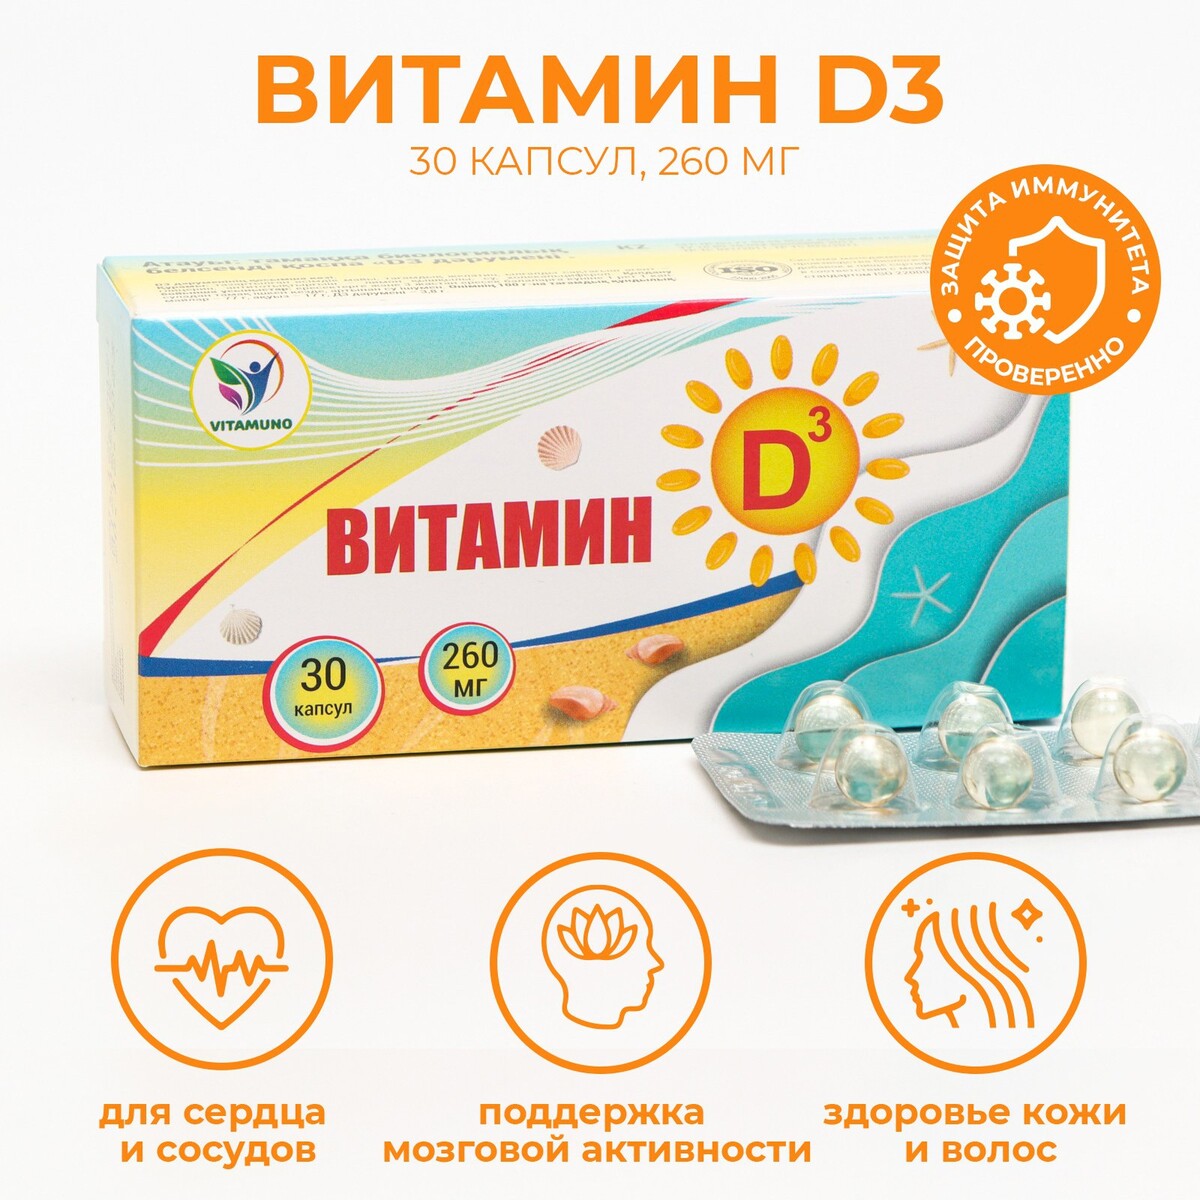 Витамин d3 vitamuno для взрослых и детей, 30 шт. по 260 мг соковыжималка пластик альтернатива витамин м6229